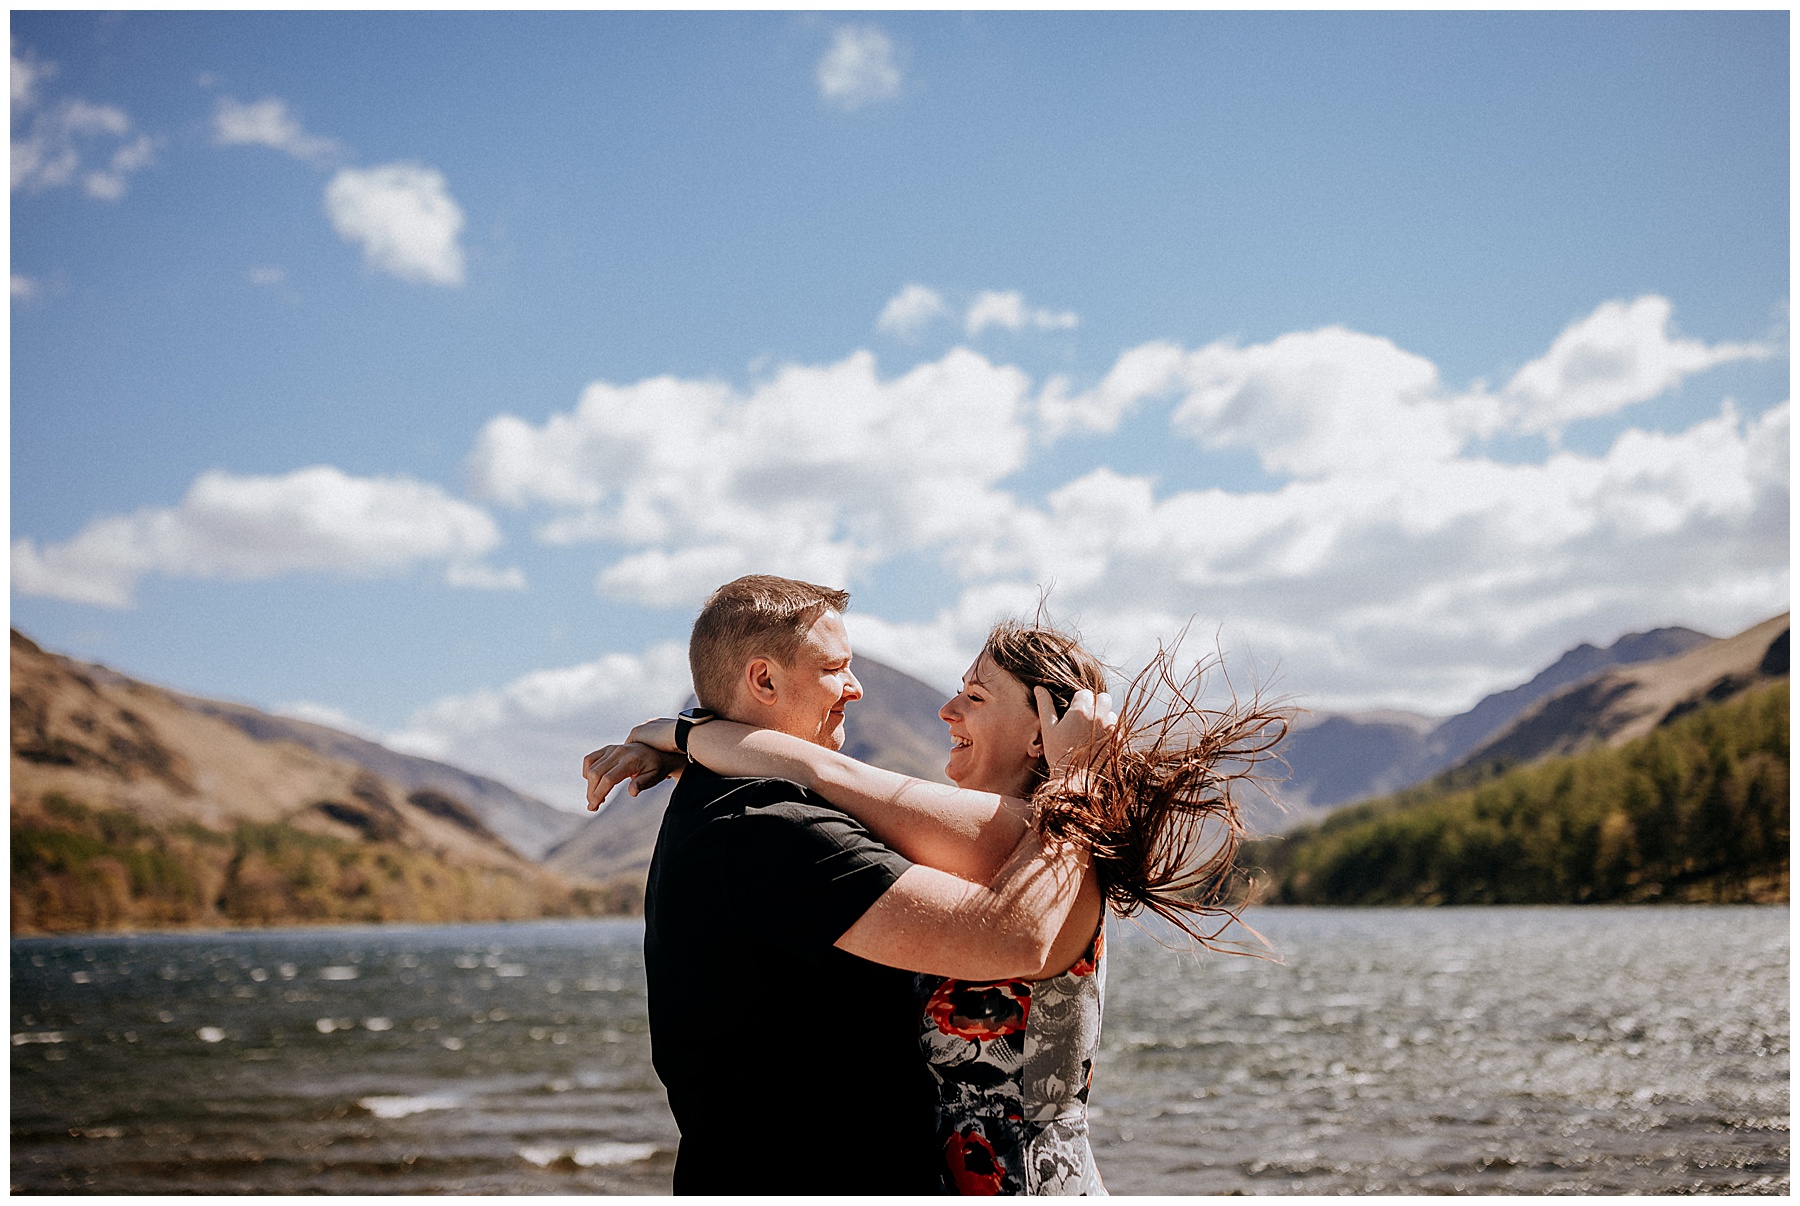 Creative Wedding Photography - Lake District Wedding Photography